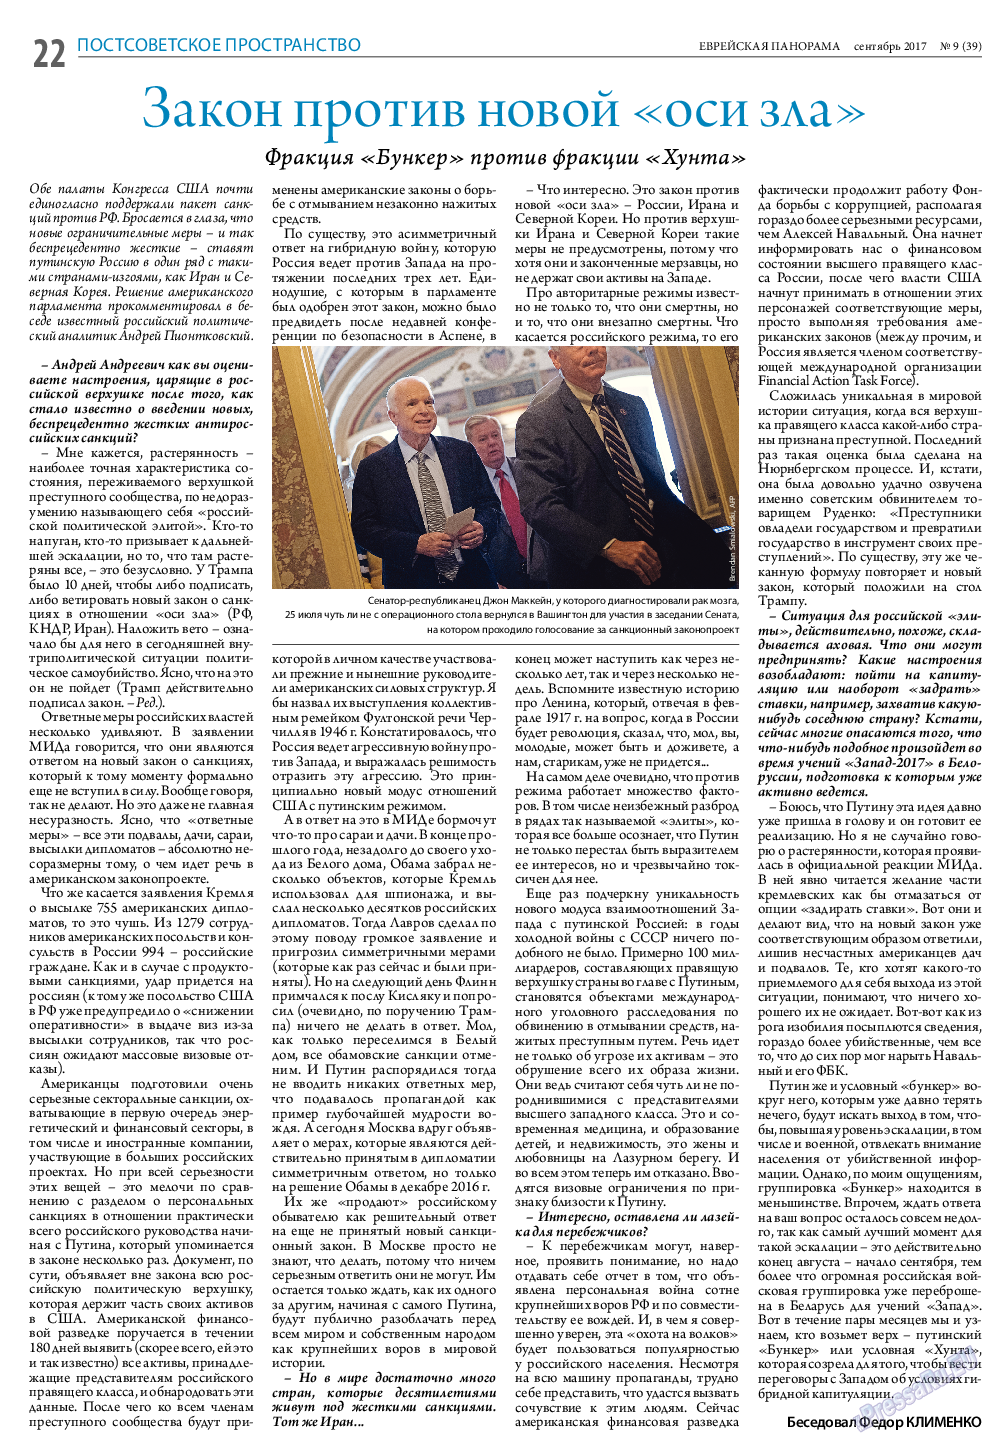 Еврейская панорама, газета. 2017 №9 стр.22